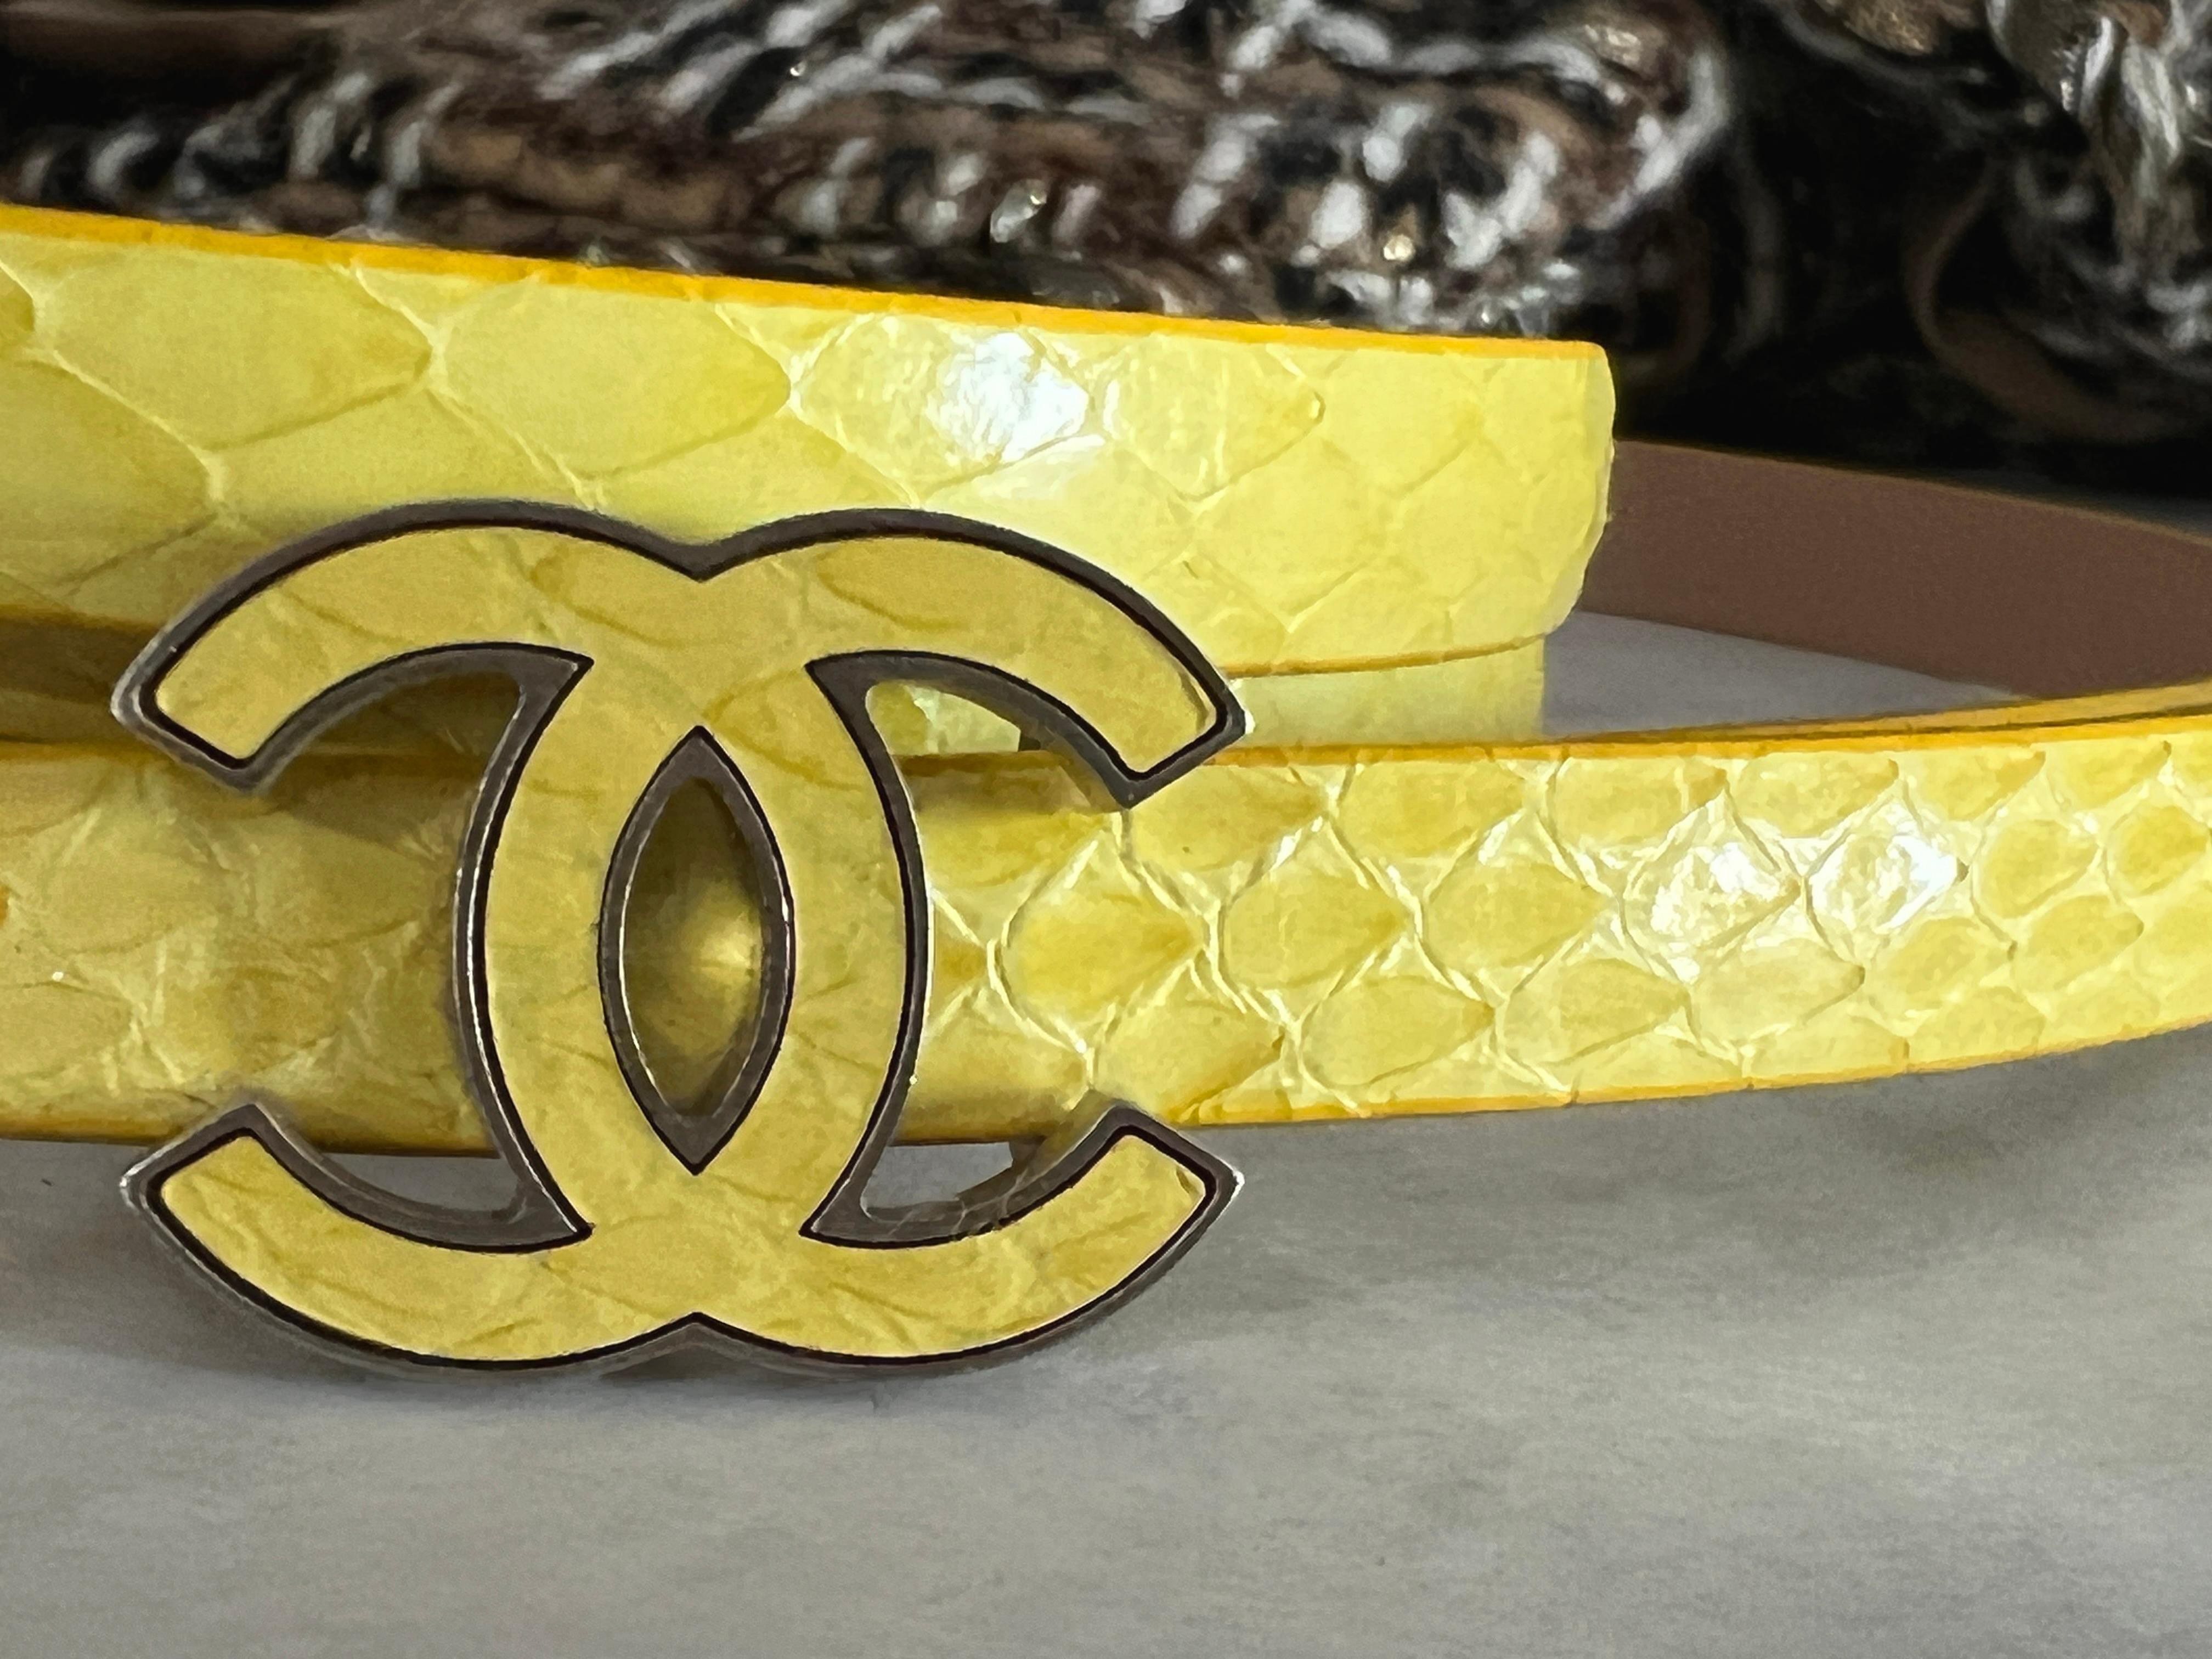 Chanel yellow python belt with CC buckle.
Length 95cm, kept unworn.